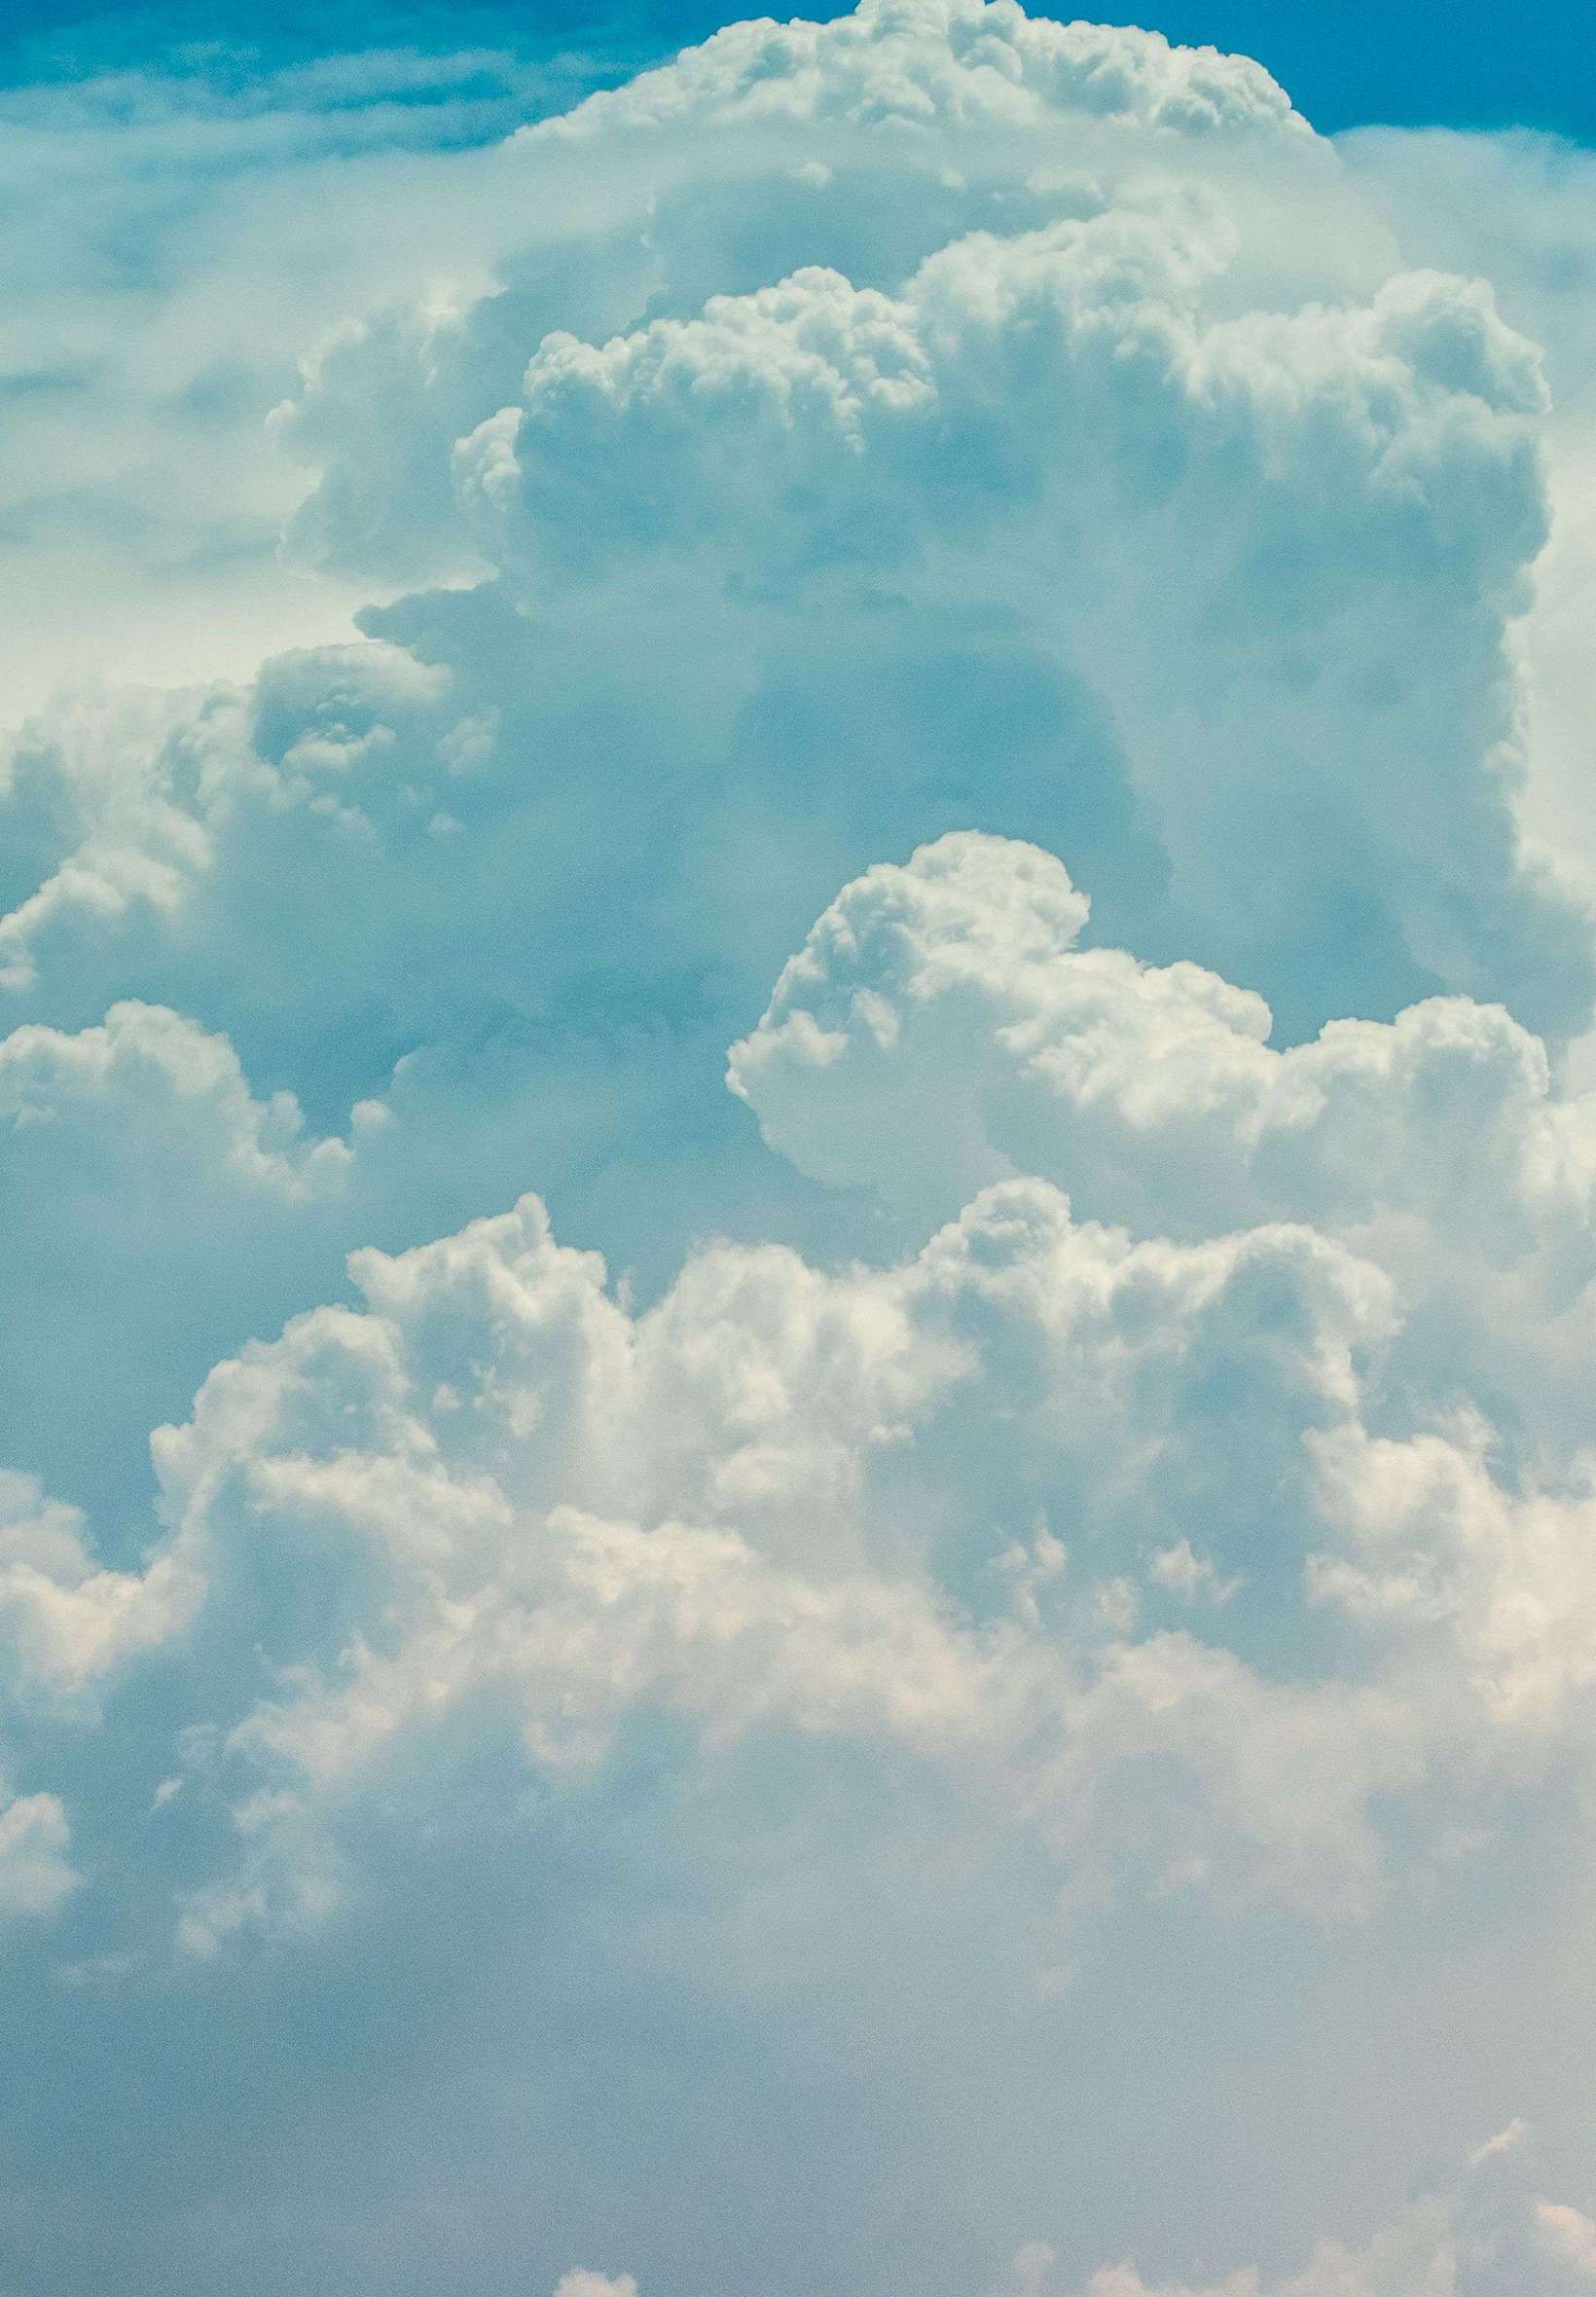 Clouds Porous Sky iPad Wallpaper